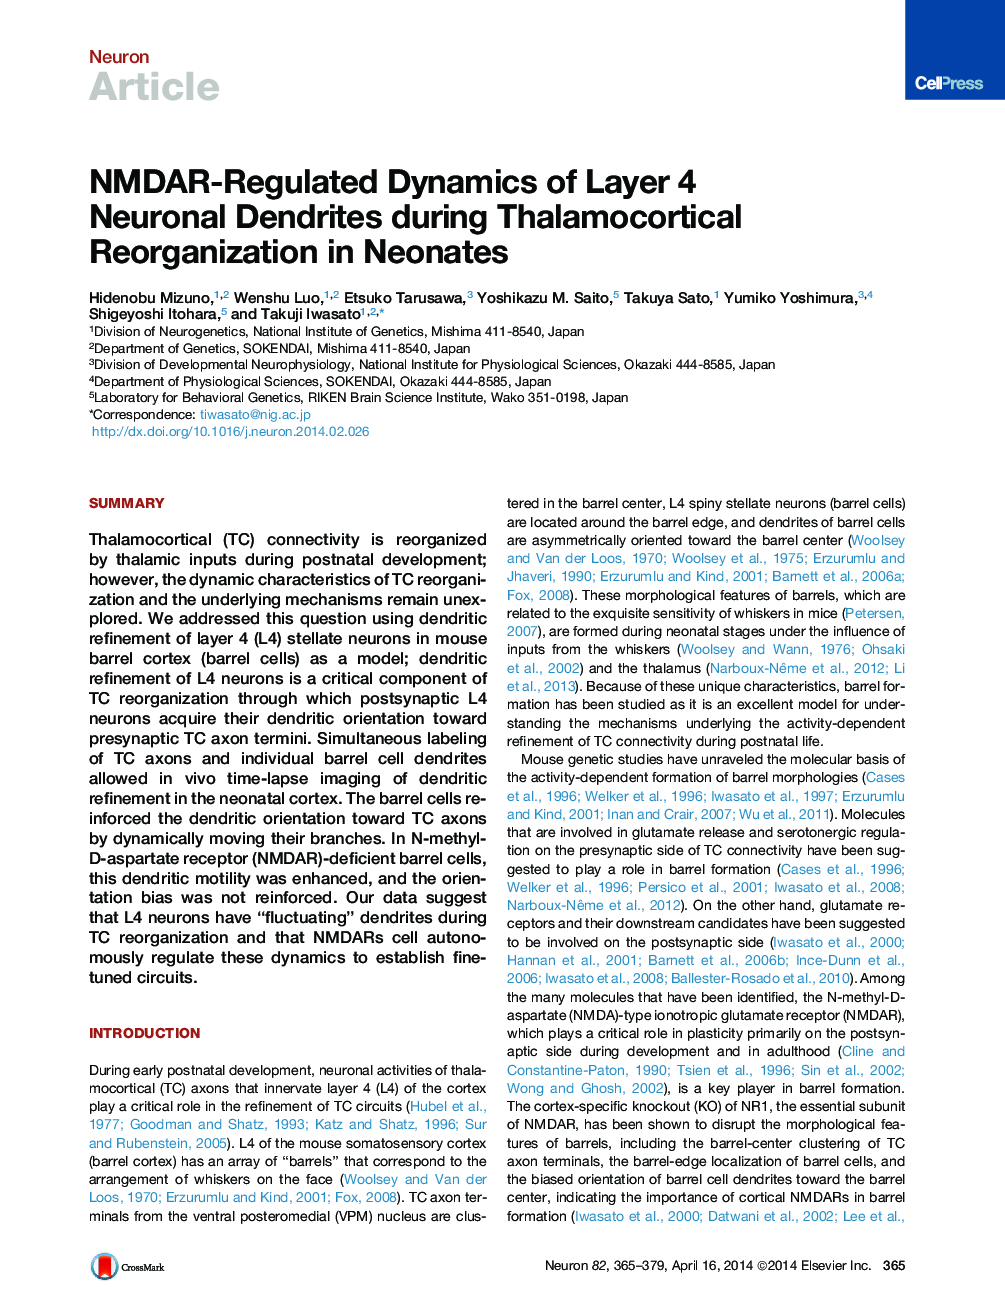 NMDAR-Regulated Dynamics of Layer 4 Neuronal Dendrites during Thalamocortical Reorganization in Neonates